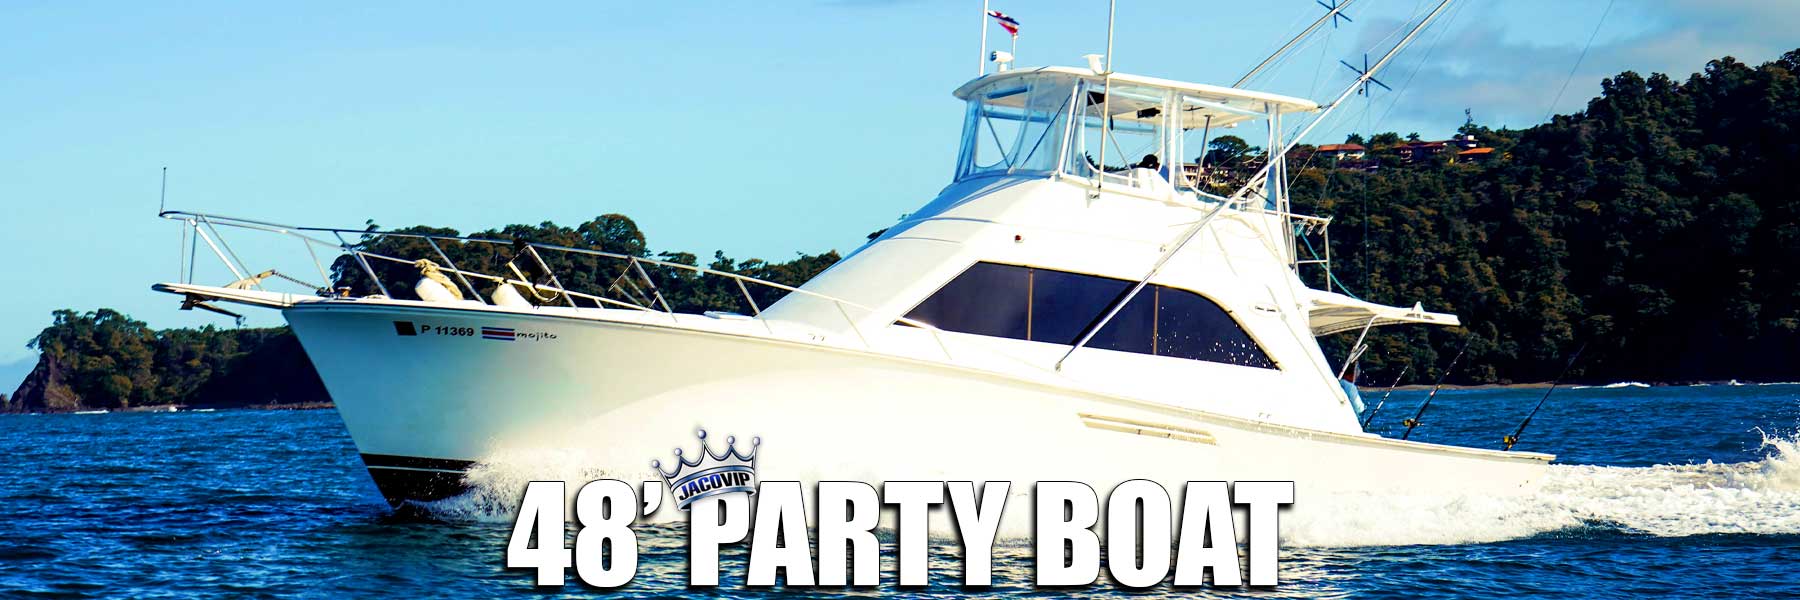 Jaco VIP party boat moving fast on ocean in front of Los Sueños